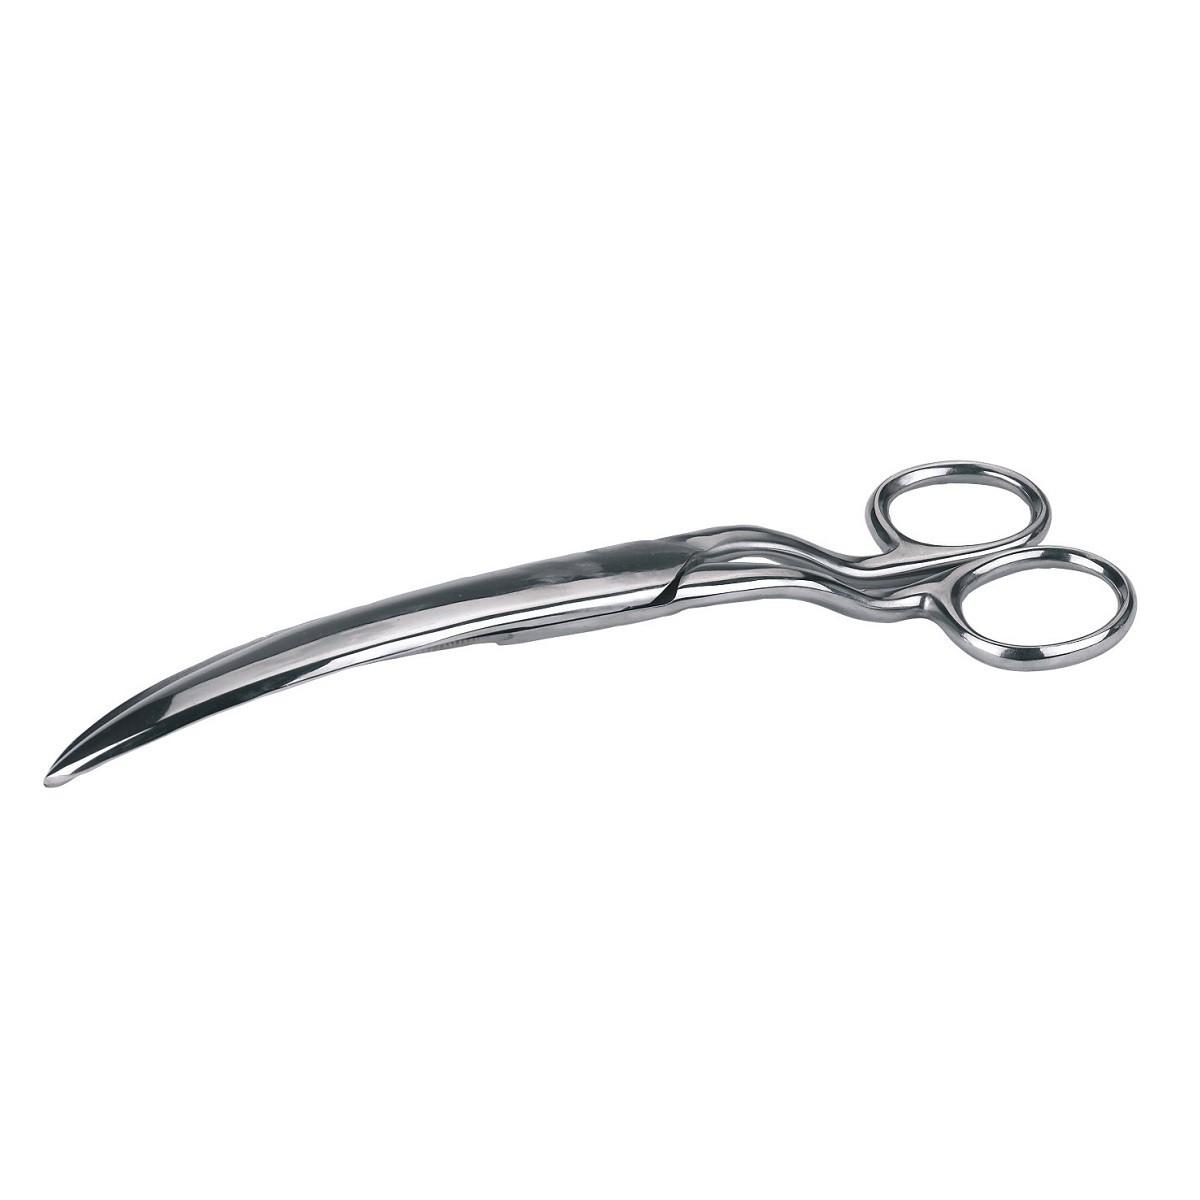 Fetlock scissors, stainless, approx. 20 cm